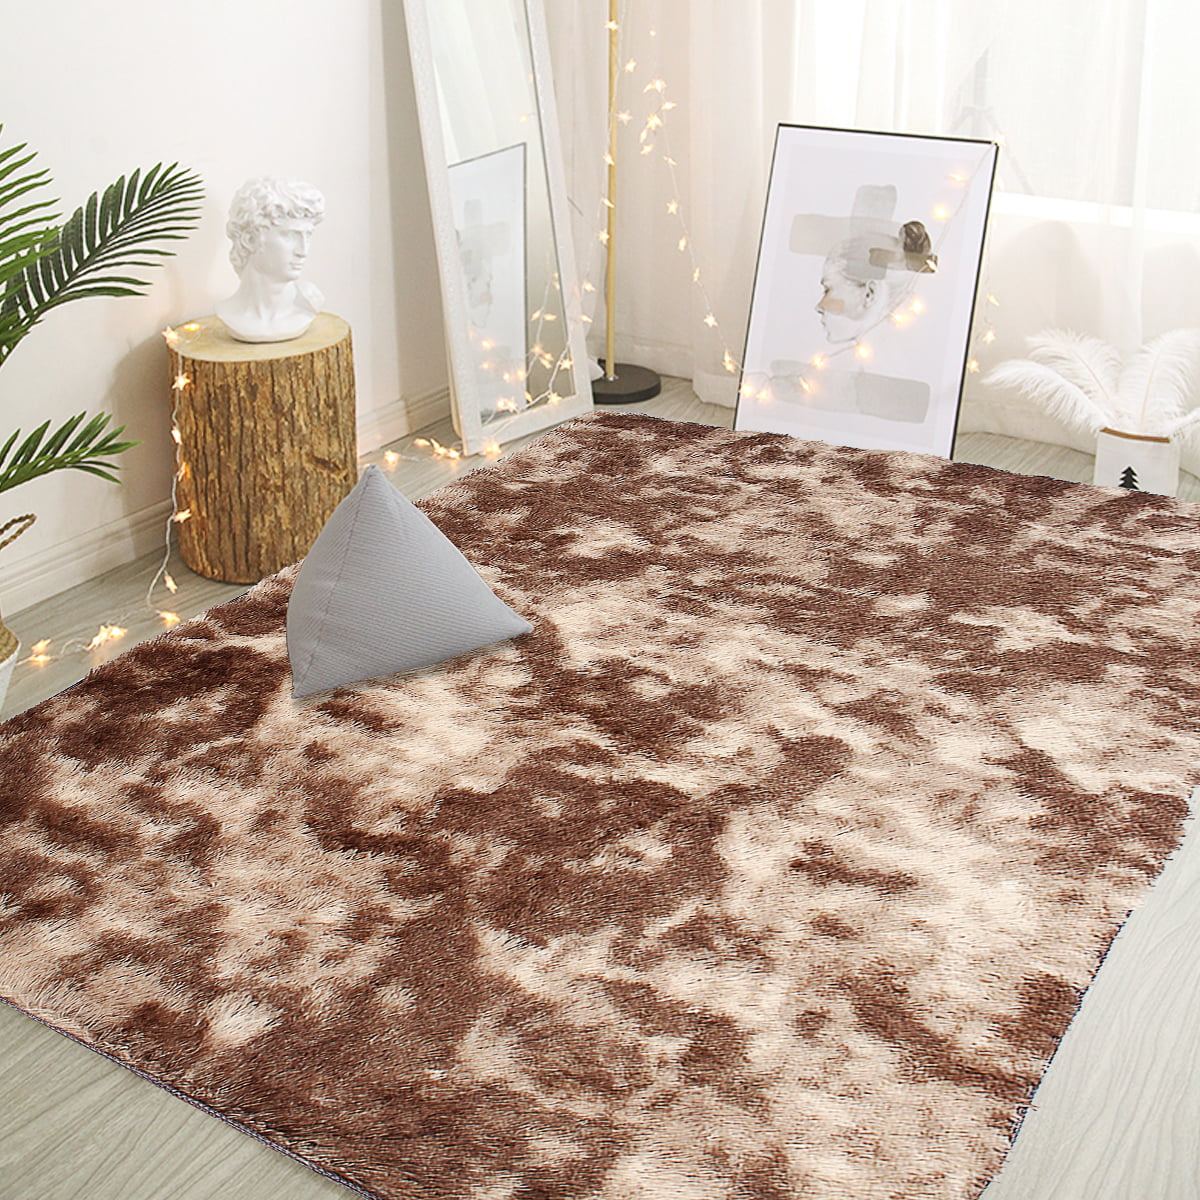 Plush Shaggy Soft Round Carpet Non-Slip Water absorption Floor Rug Yoga Mat n 